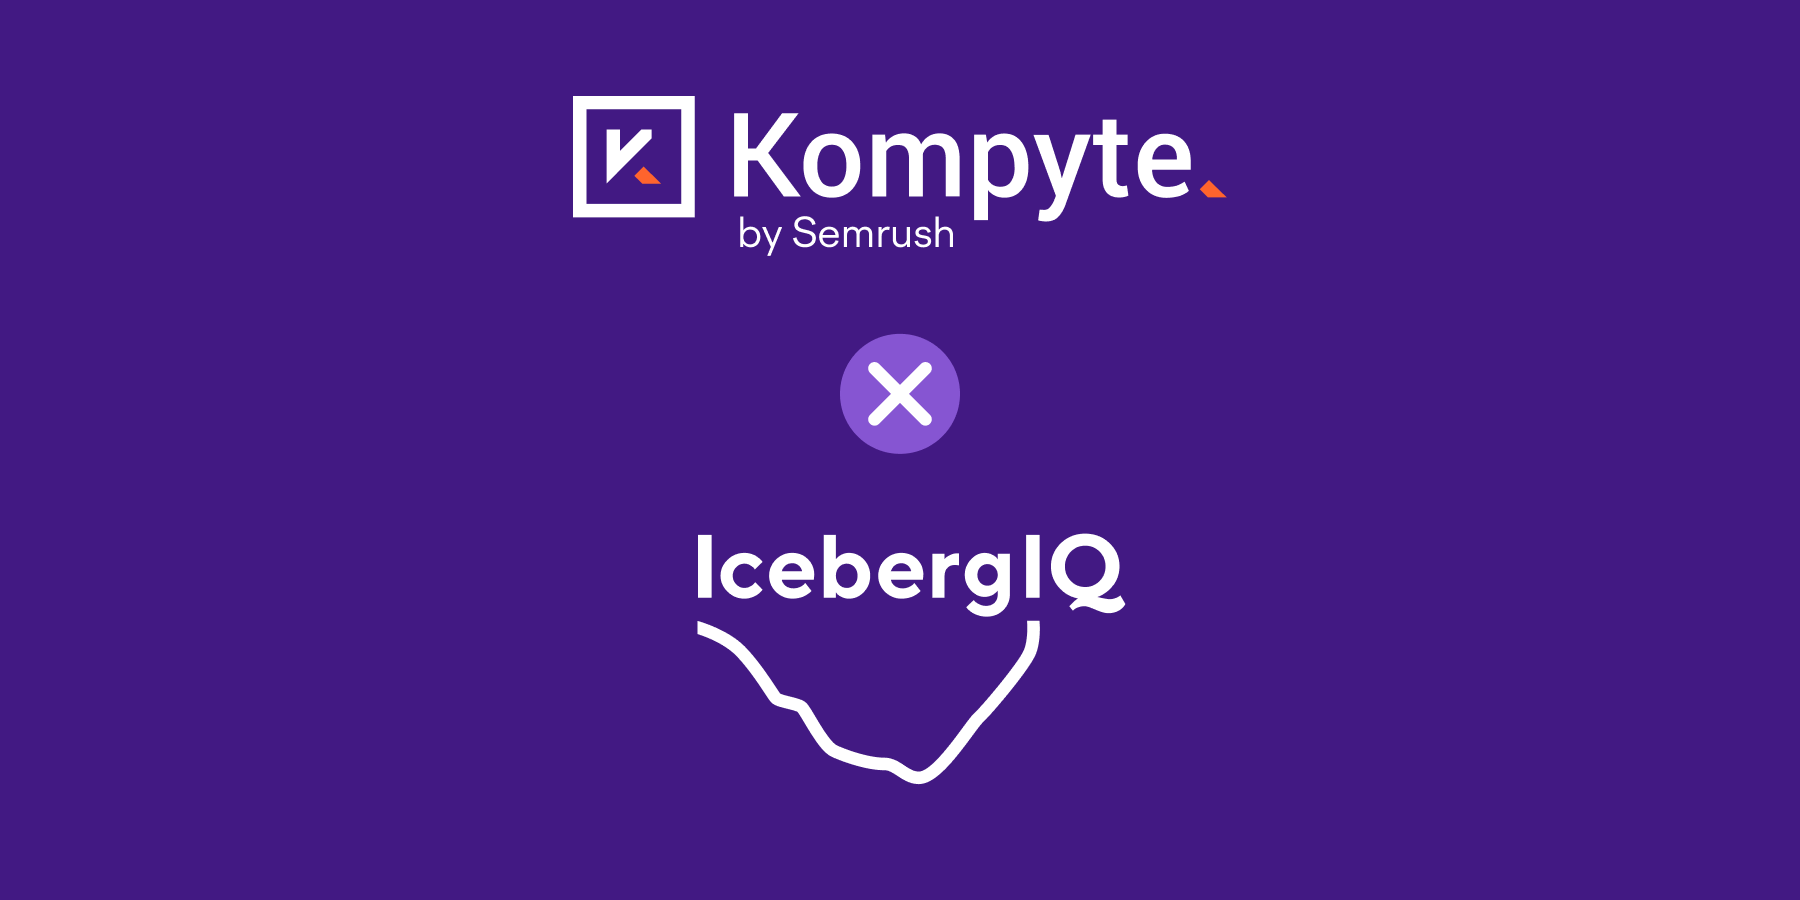 Kompyte ร่วมมือกับ IcebergIQ